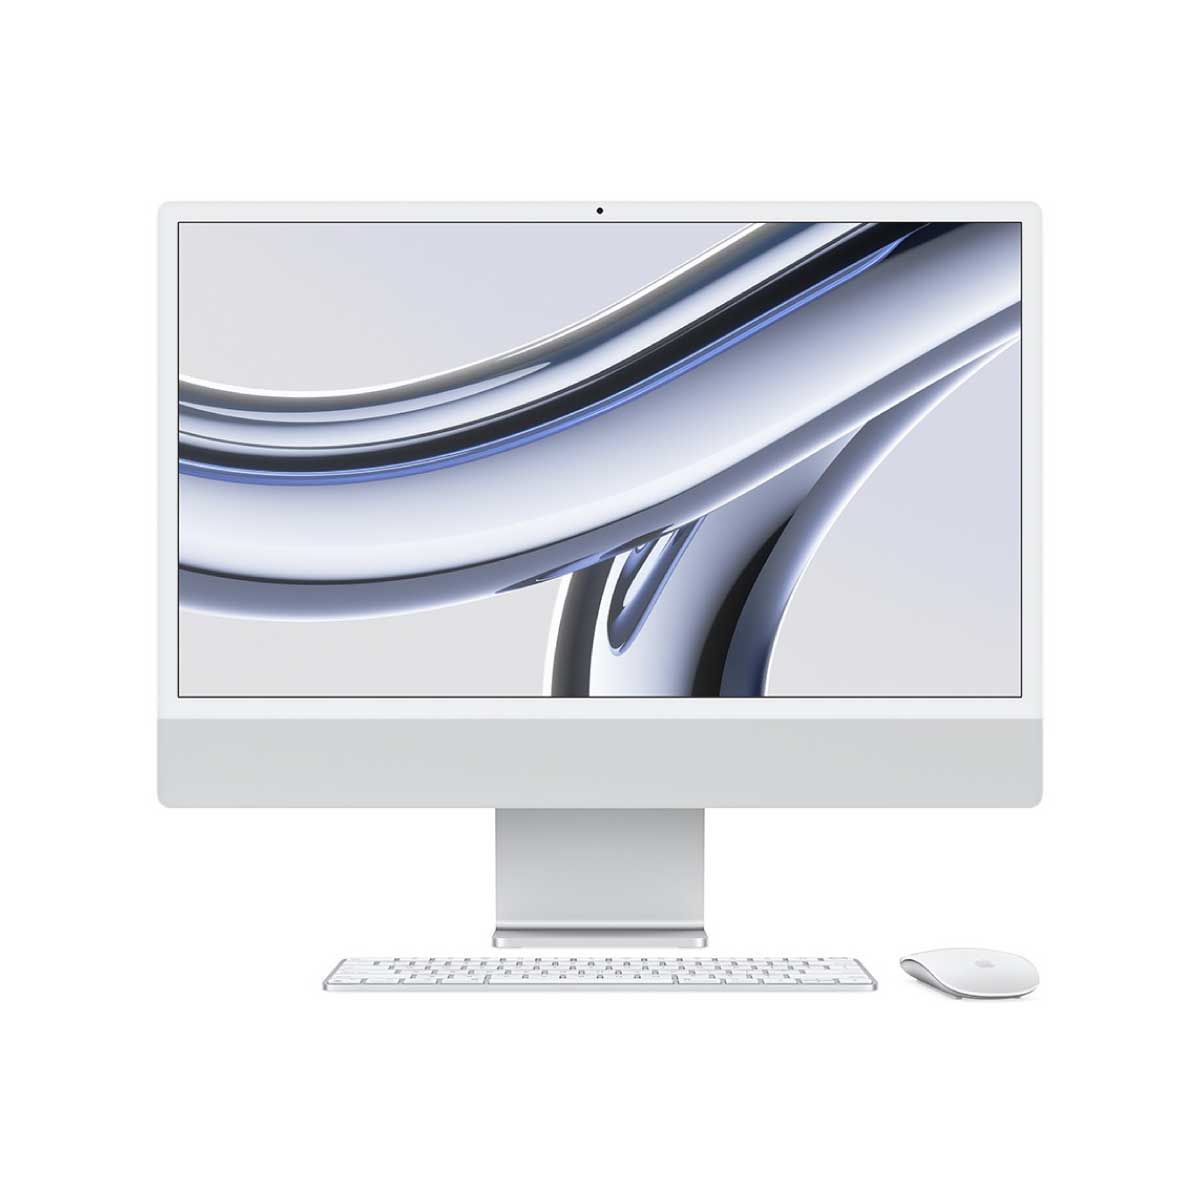 Apple iMac รุ่น 24 นิ้ว (ชิป M3) 256GB Silver